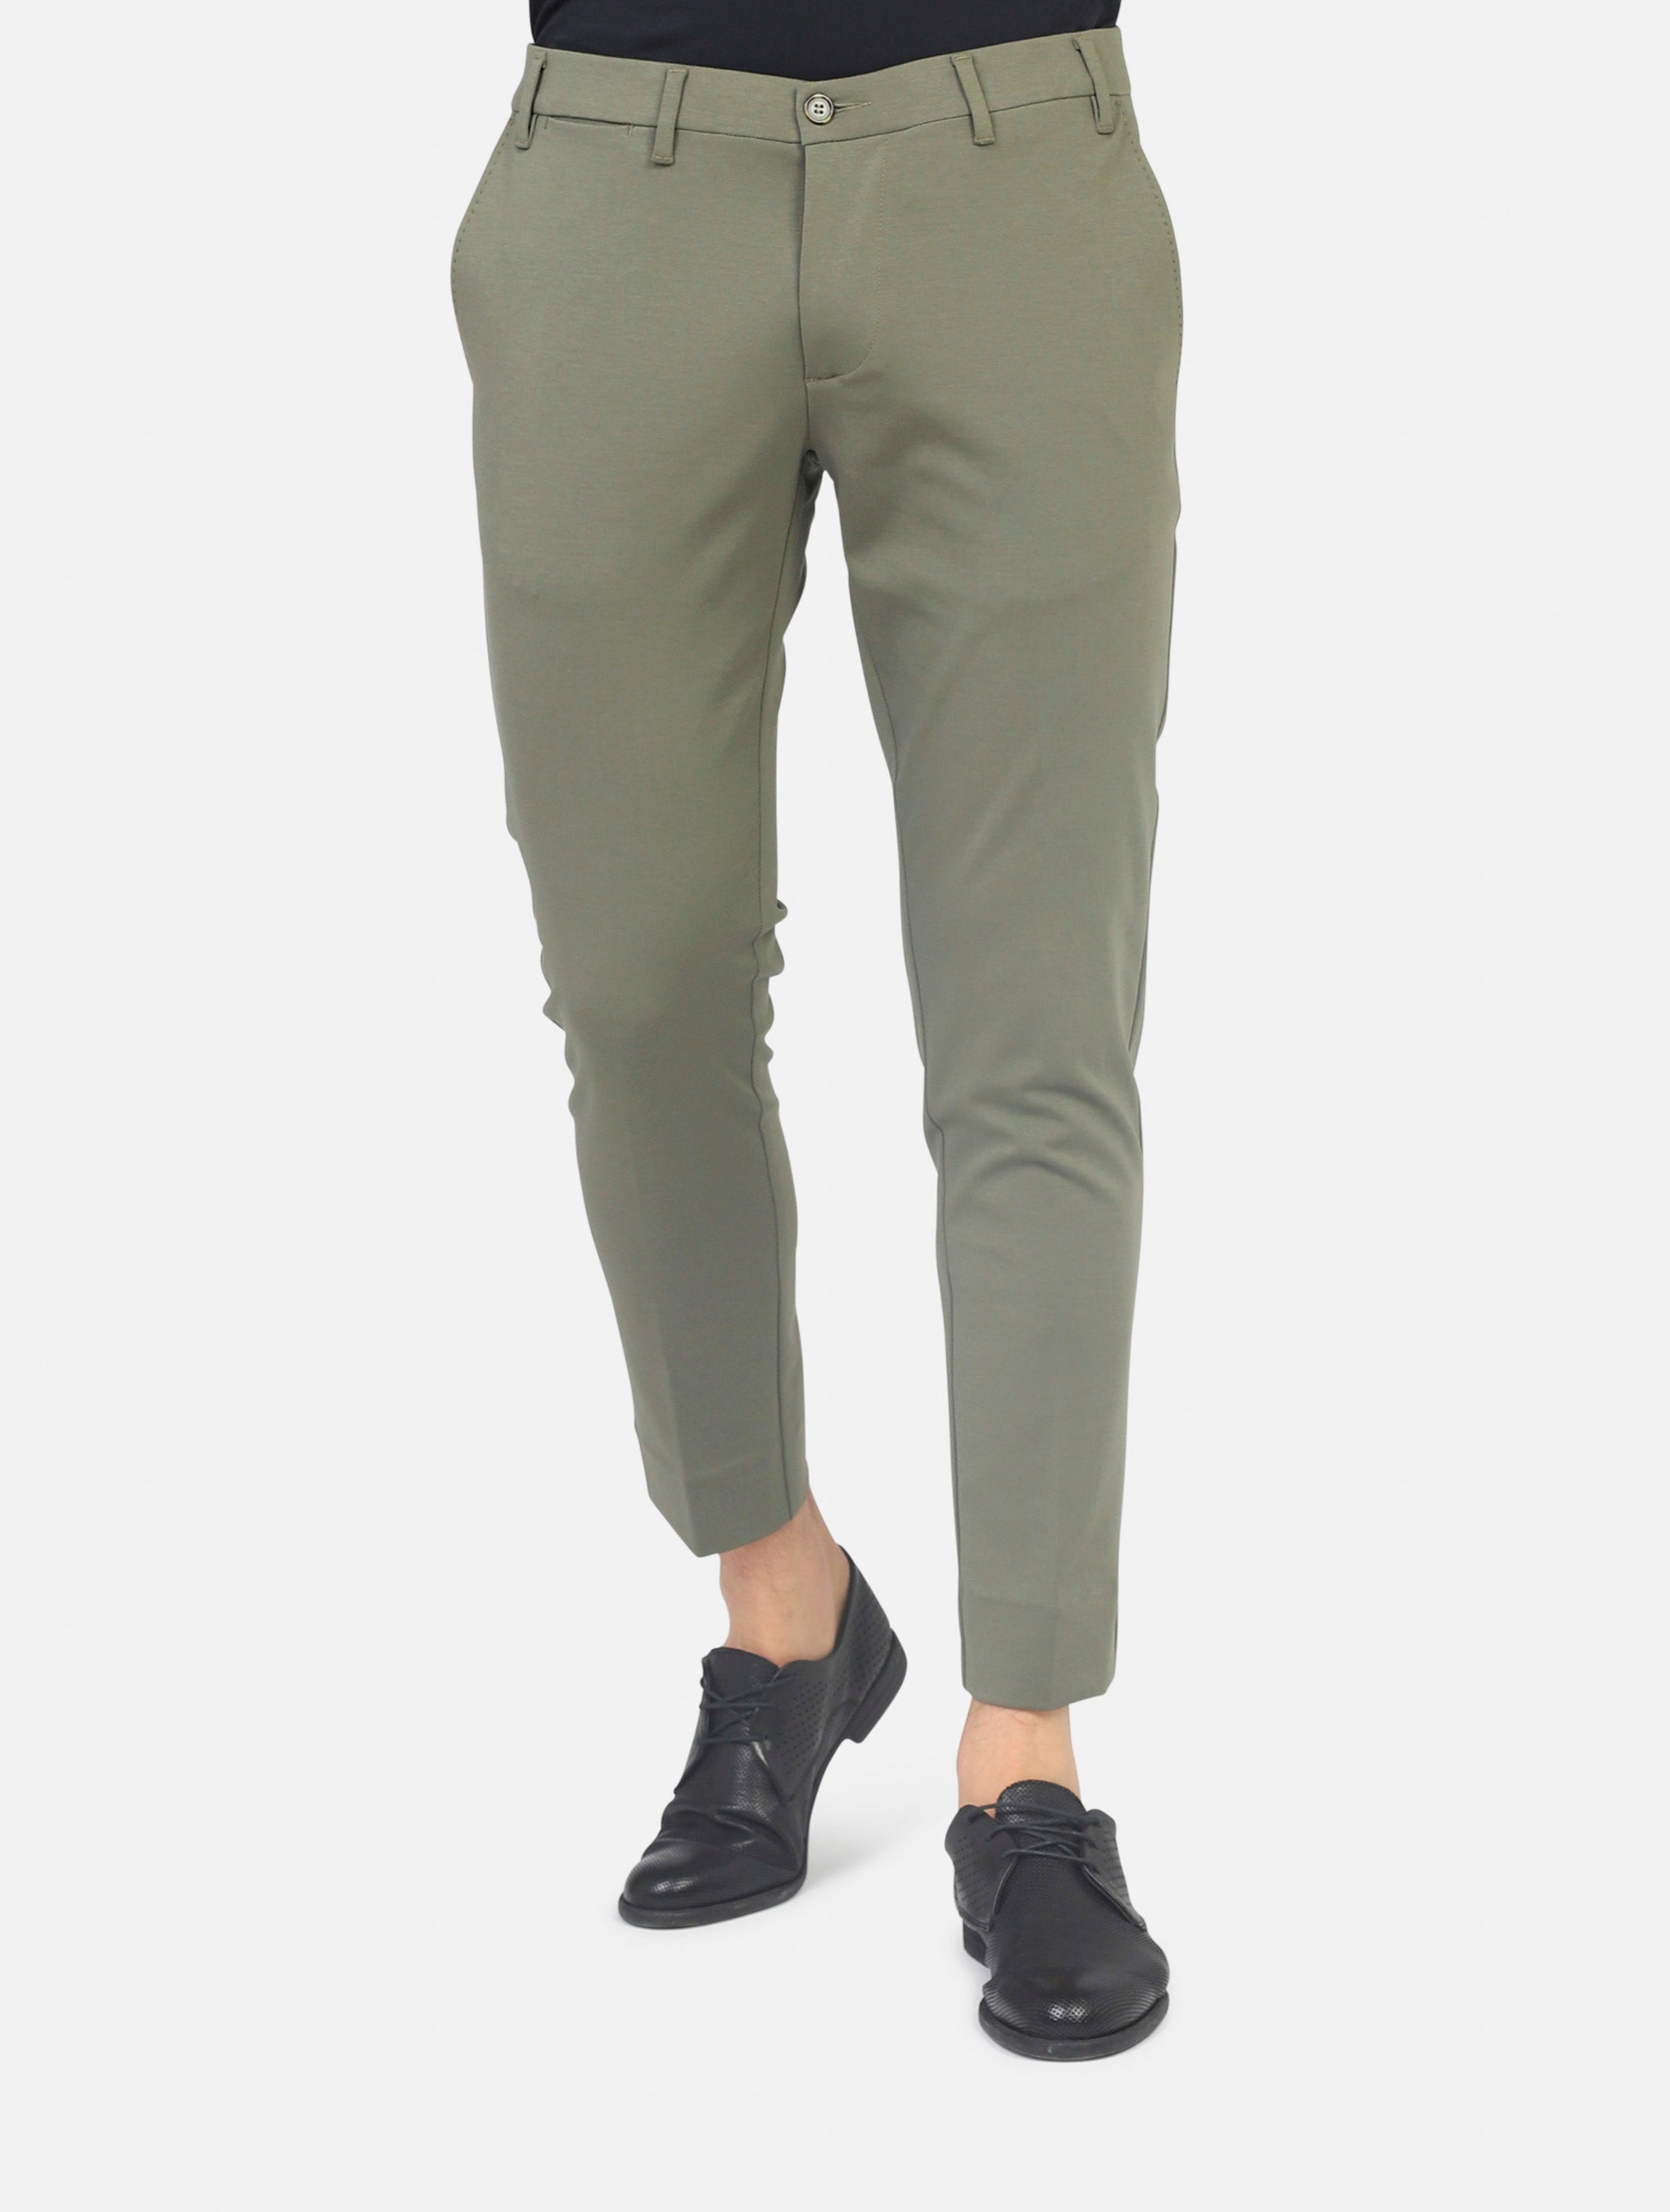 Pantalone why not brand  verde militare uomo 